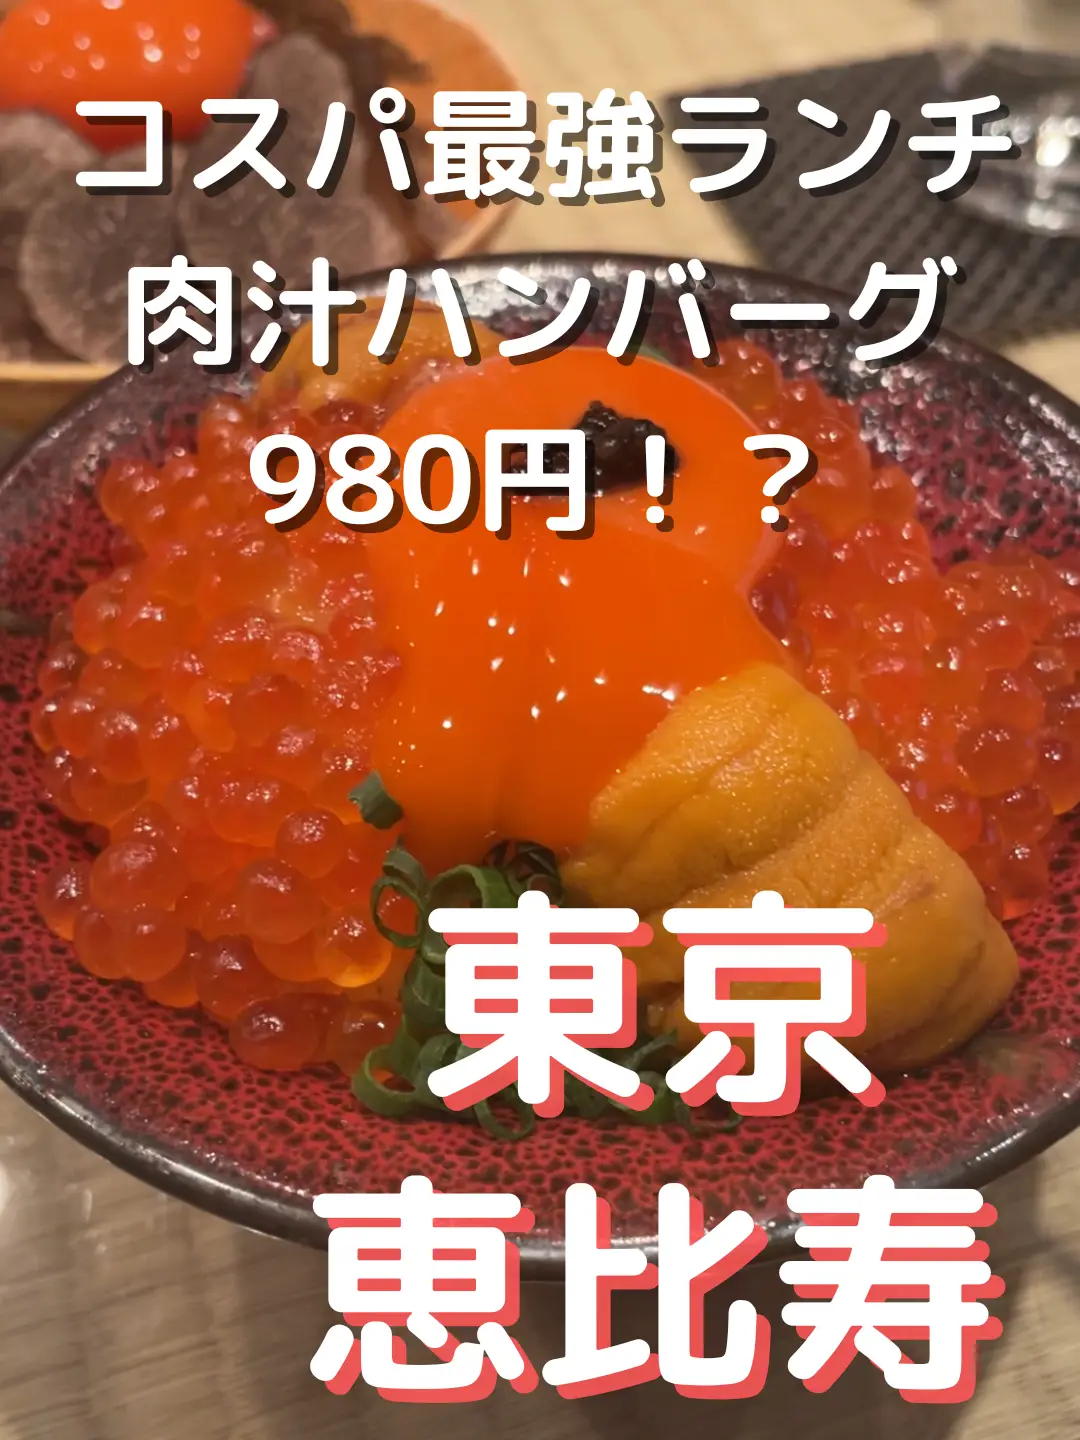 [Cospa strongest] I definitely want to go! Ikura bowl and instant smoked  hamburger steak are too delicious [Ebisu Juban Ukyo]